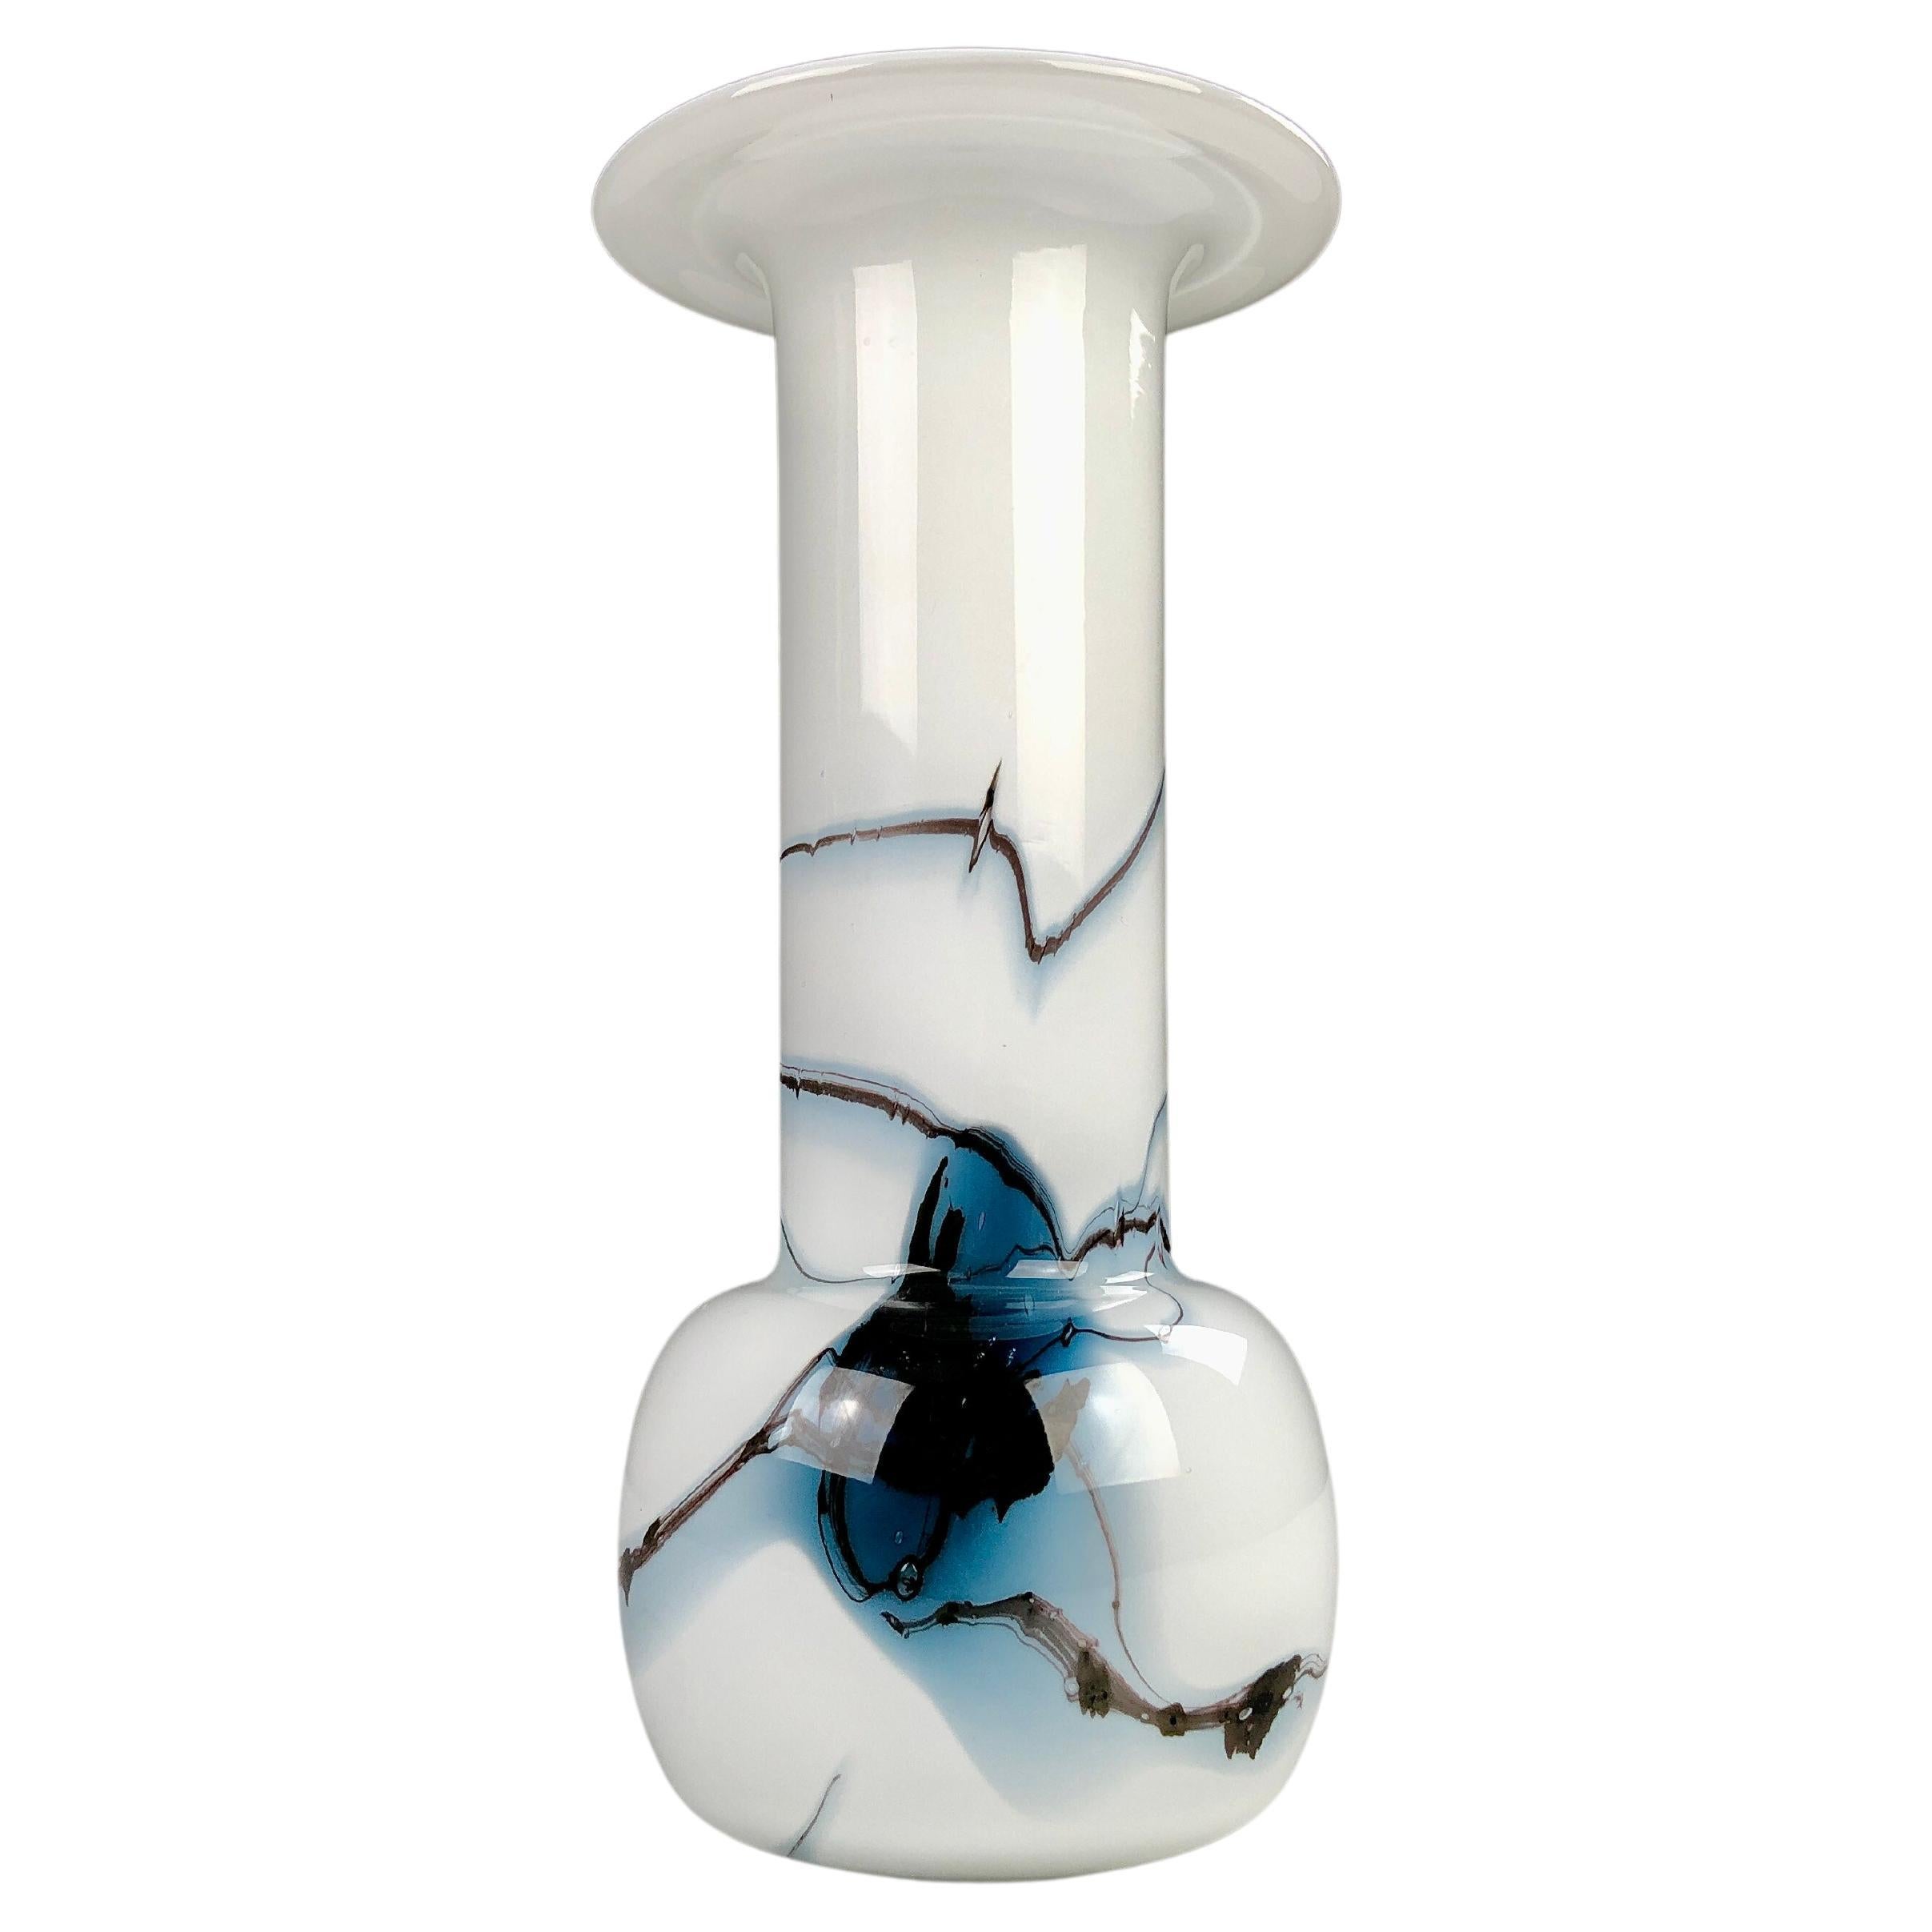 1980s Danish Glass Vase / Candle Holder by Michael Bang for Holmegaard